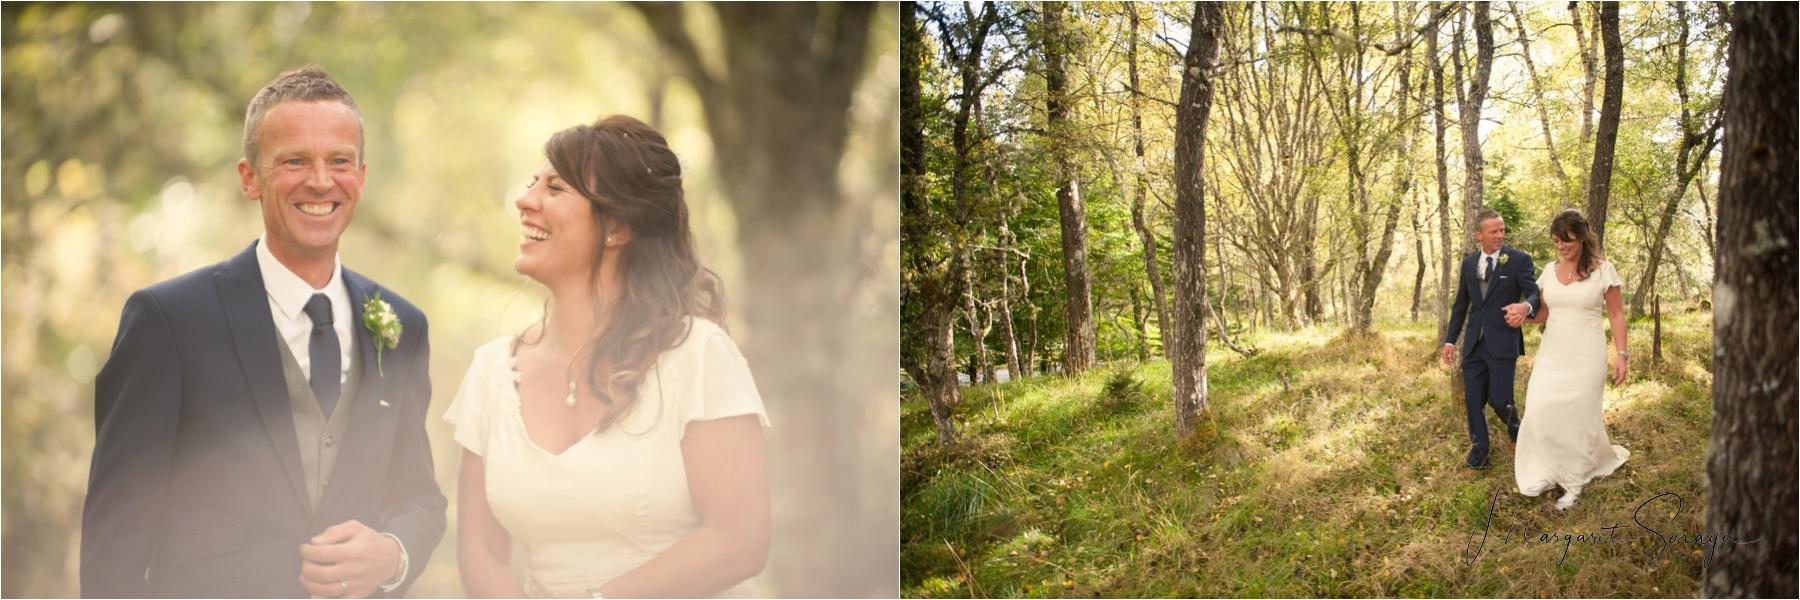 Outdoor wedding photographer inschriach House Scottish highlands